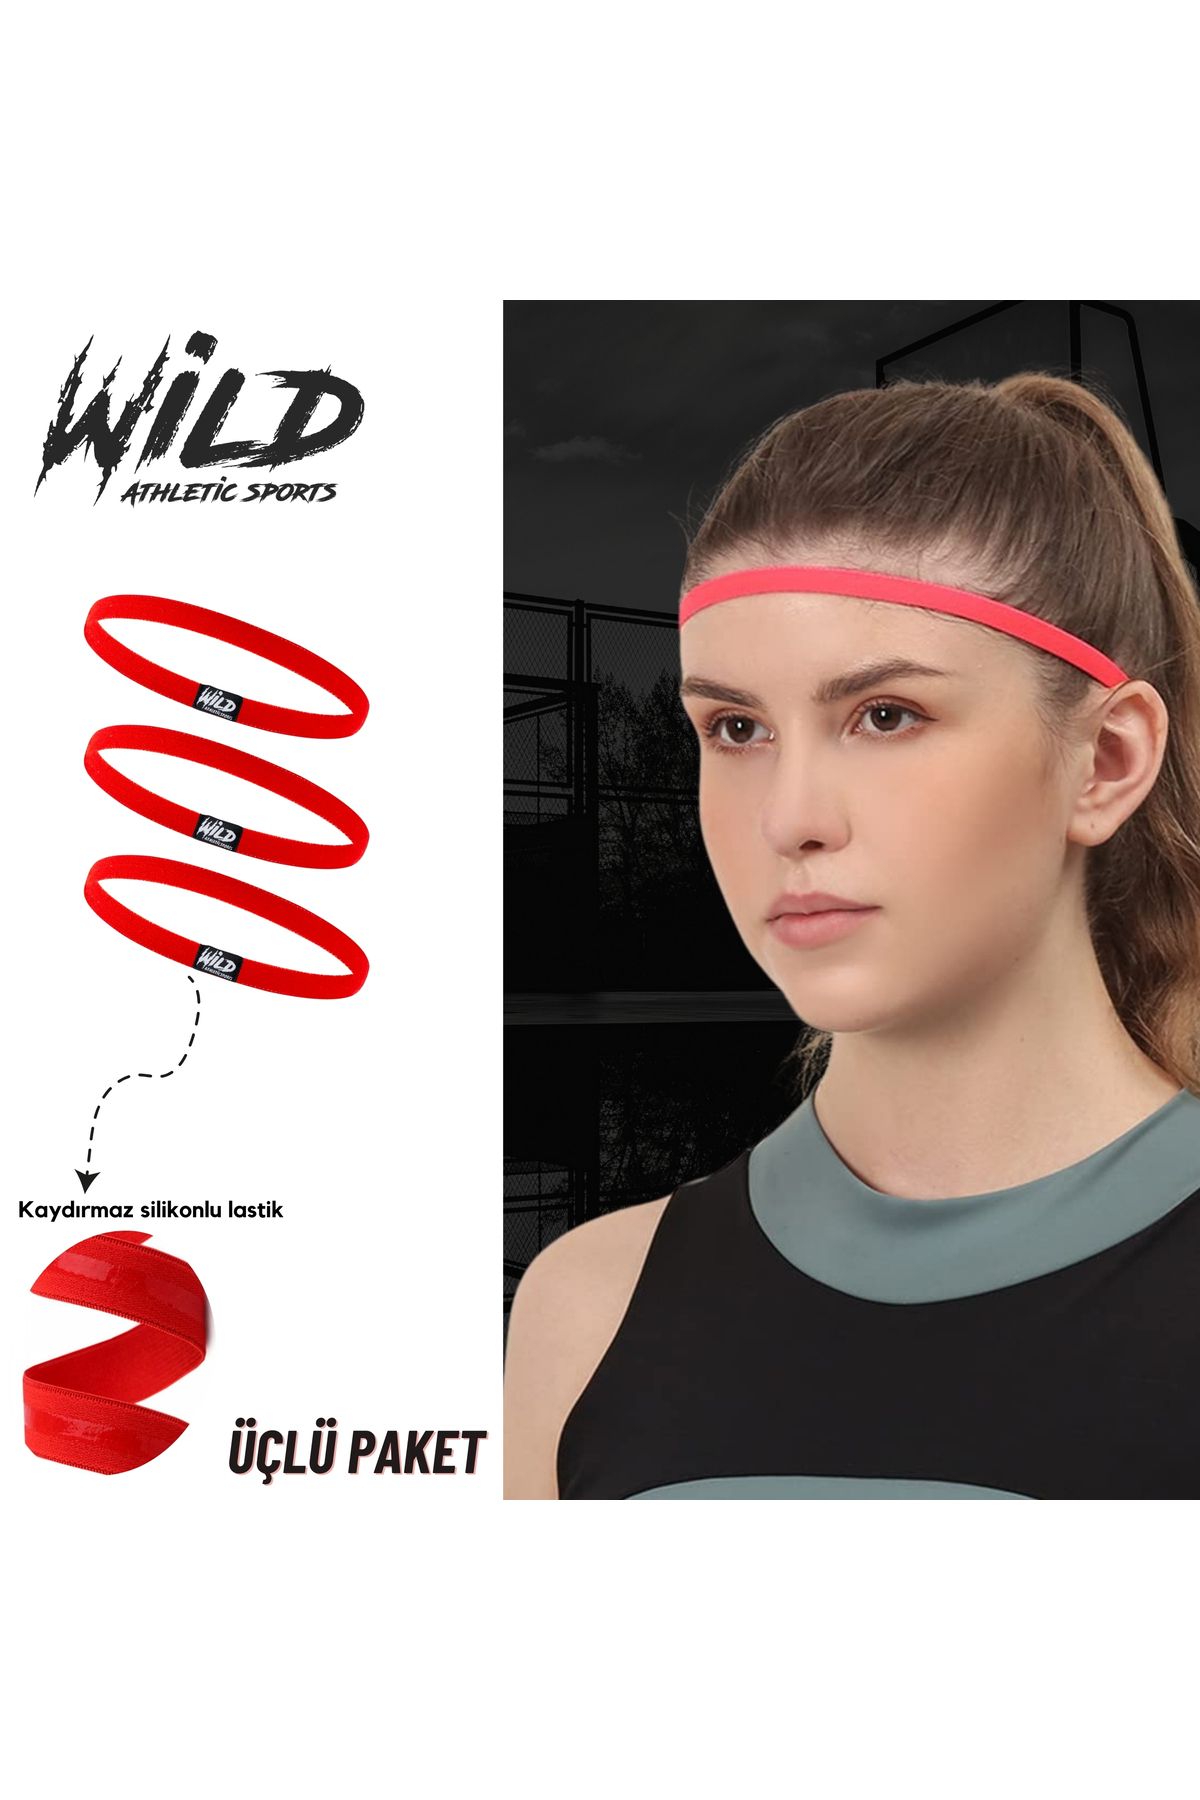 Wild Athletic Sports Kaydırmaz Spor Elastik Saç Bandı Tokası Kırmızı Tekli Wildflex